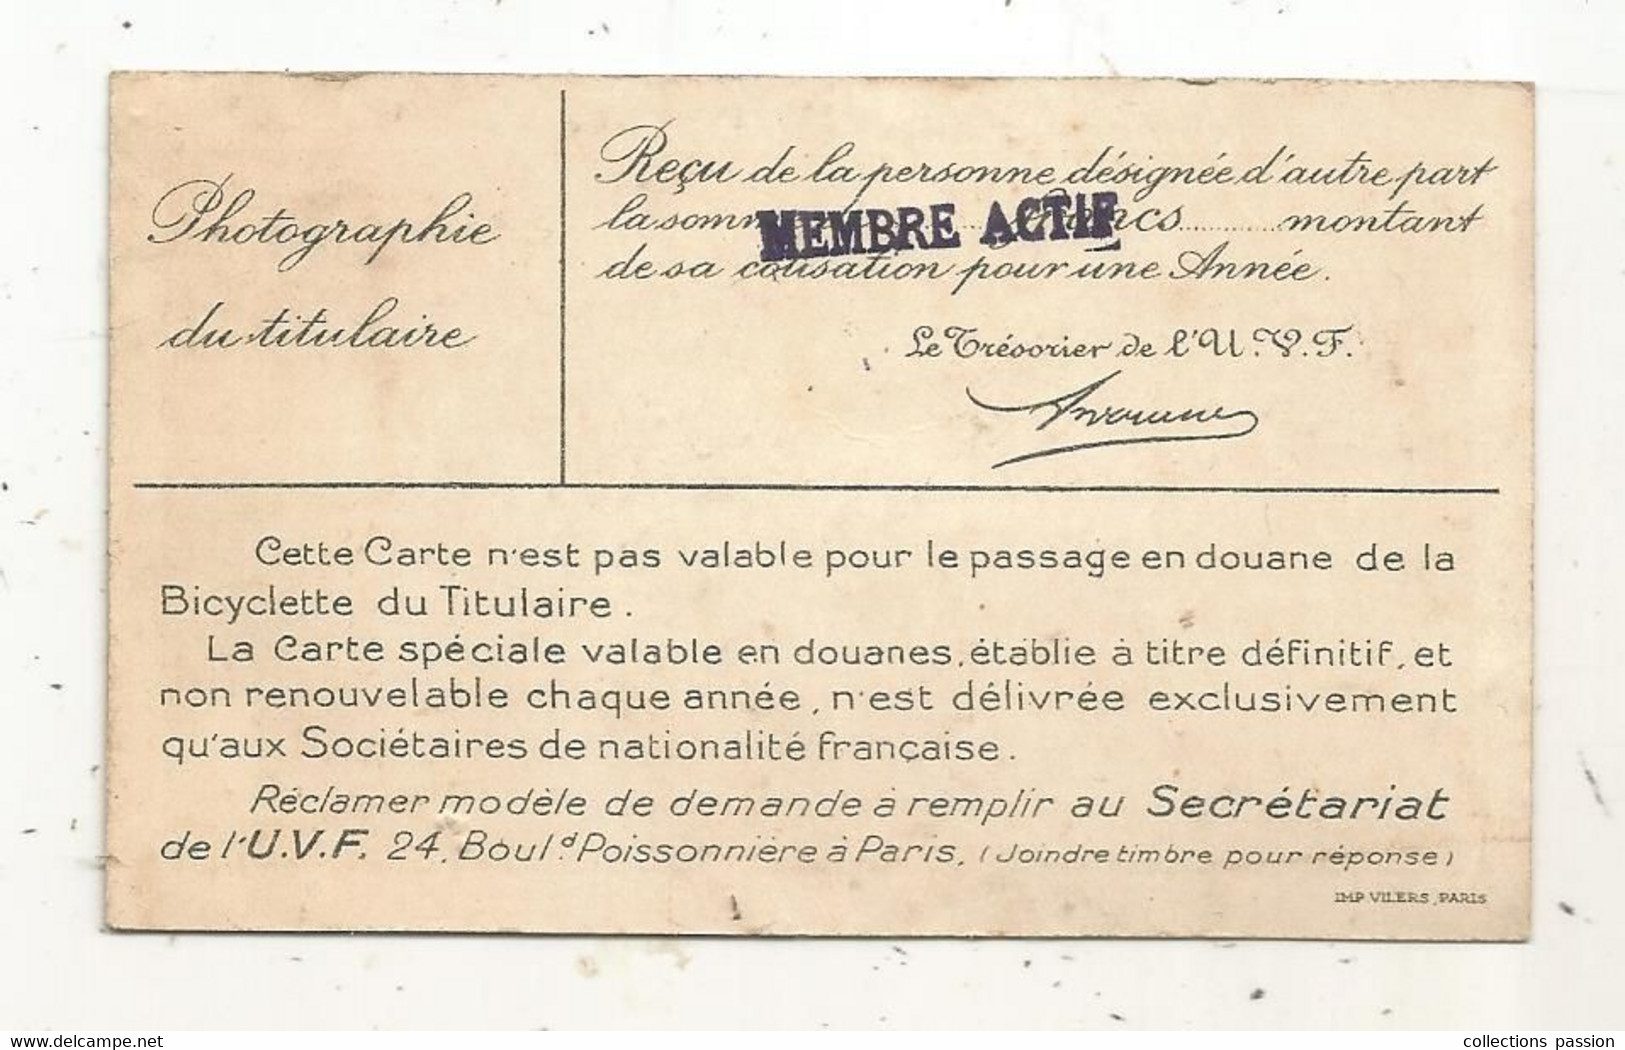 Carte De Membre, UNION VELOCIPEDIQUE DE FRANCE, 1939 - Lidmaatschapskaarten